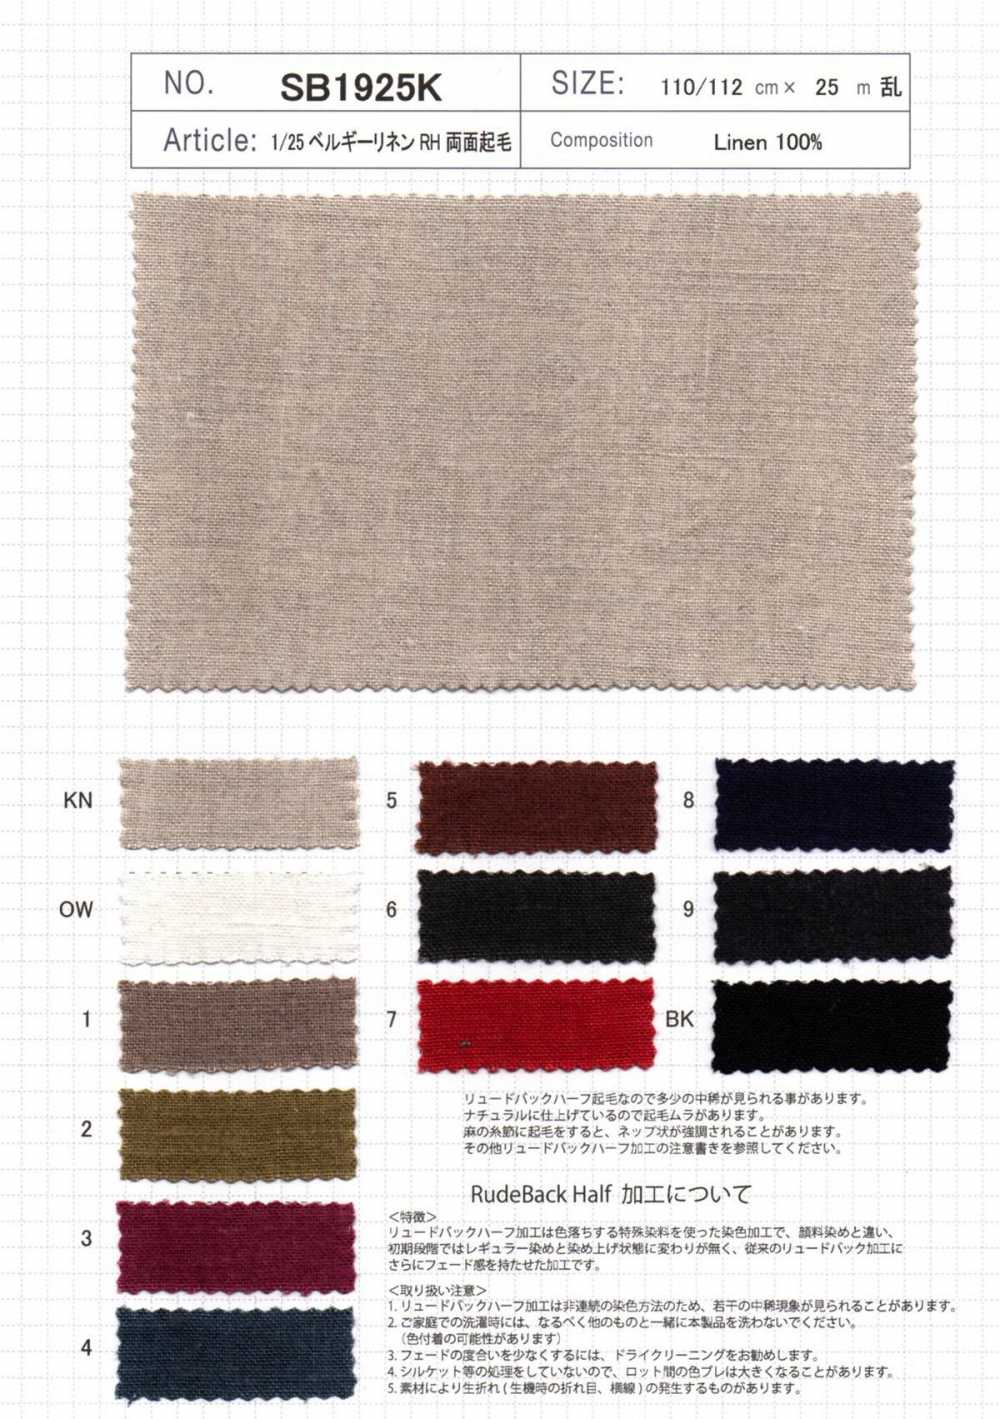 SB1925K Nom Du Produit 1/25 Belgian Linen RH Fuzzy On Both Sides[Fabrication De Textile] SHIBAYA